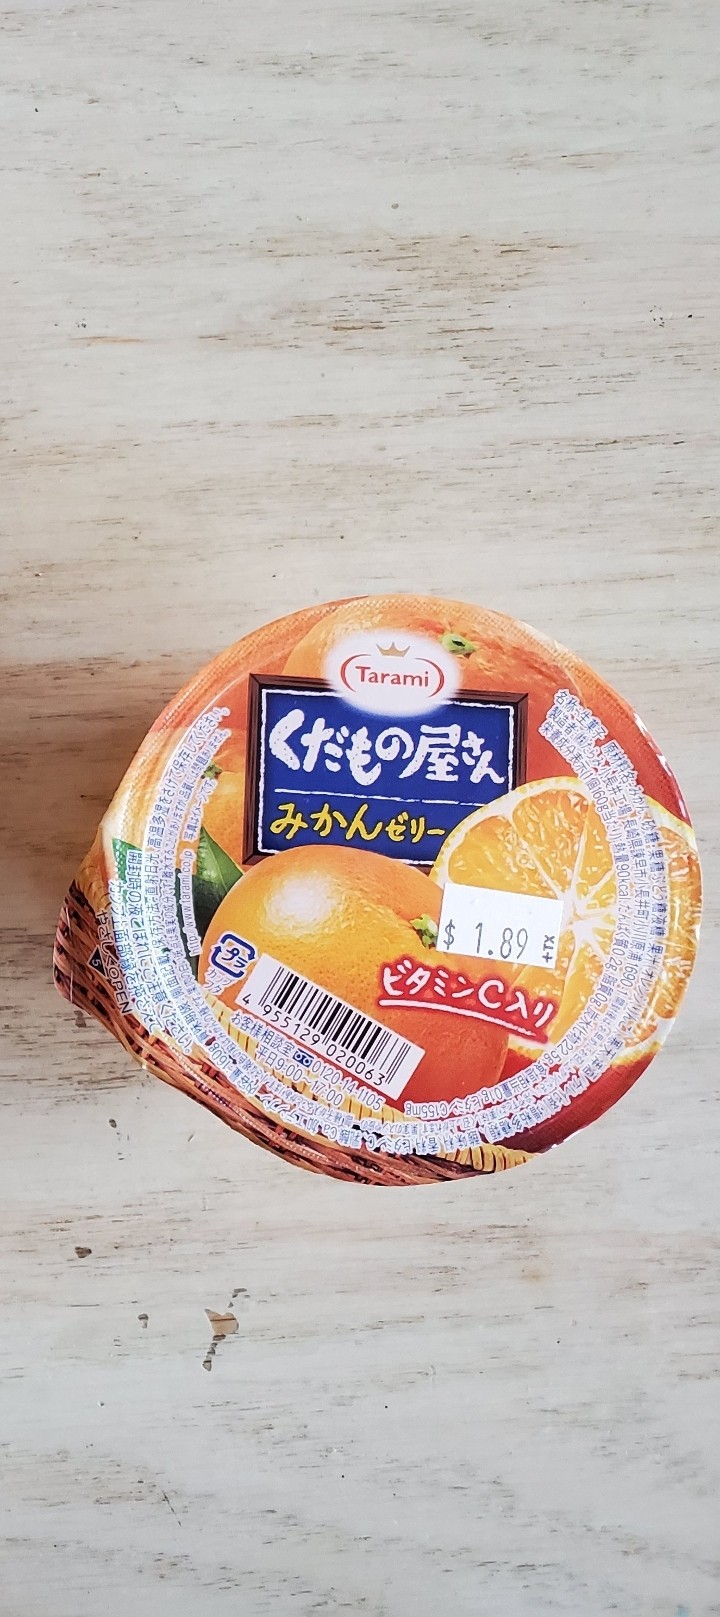 A17 Tarami Mandarin Orange Jelly